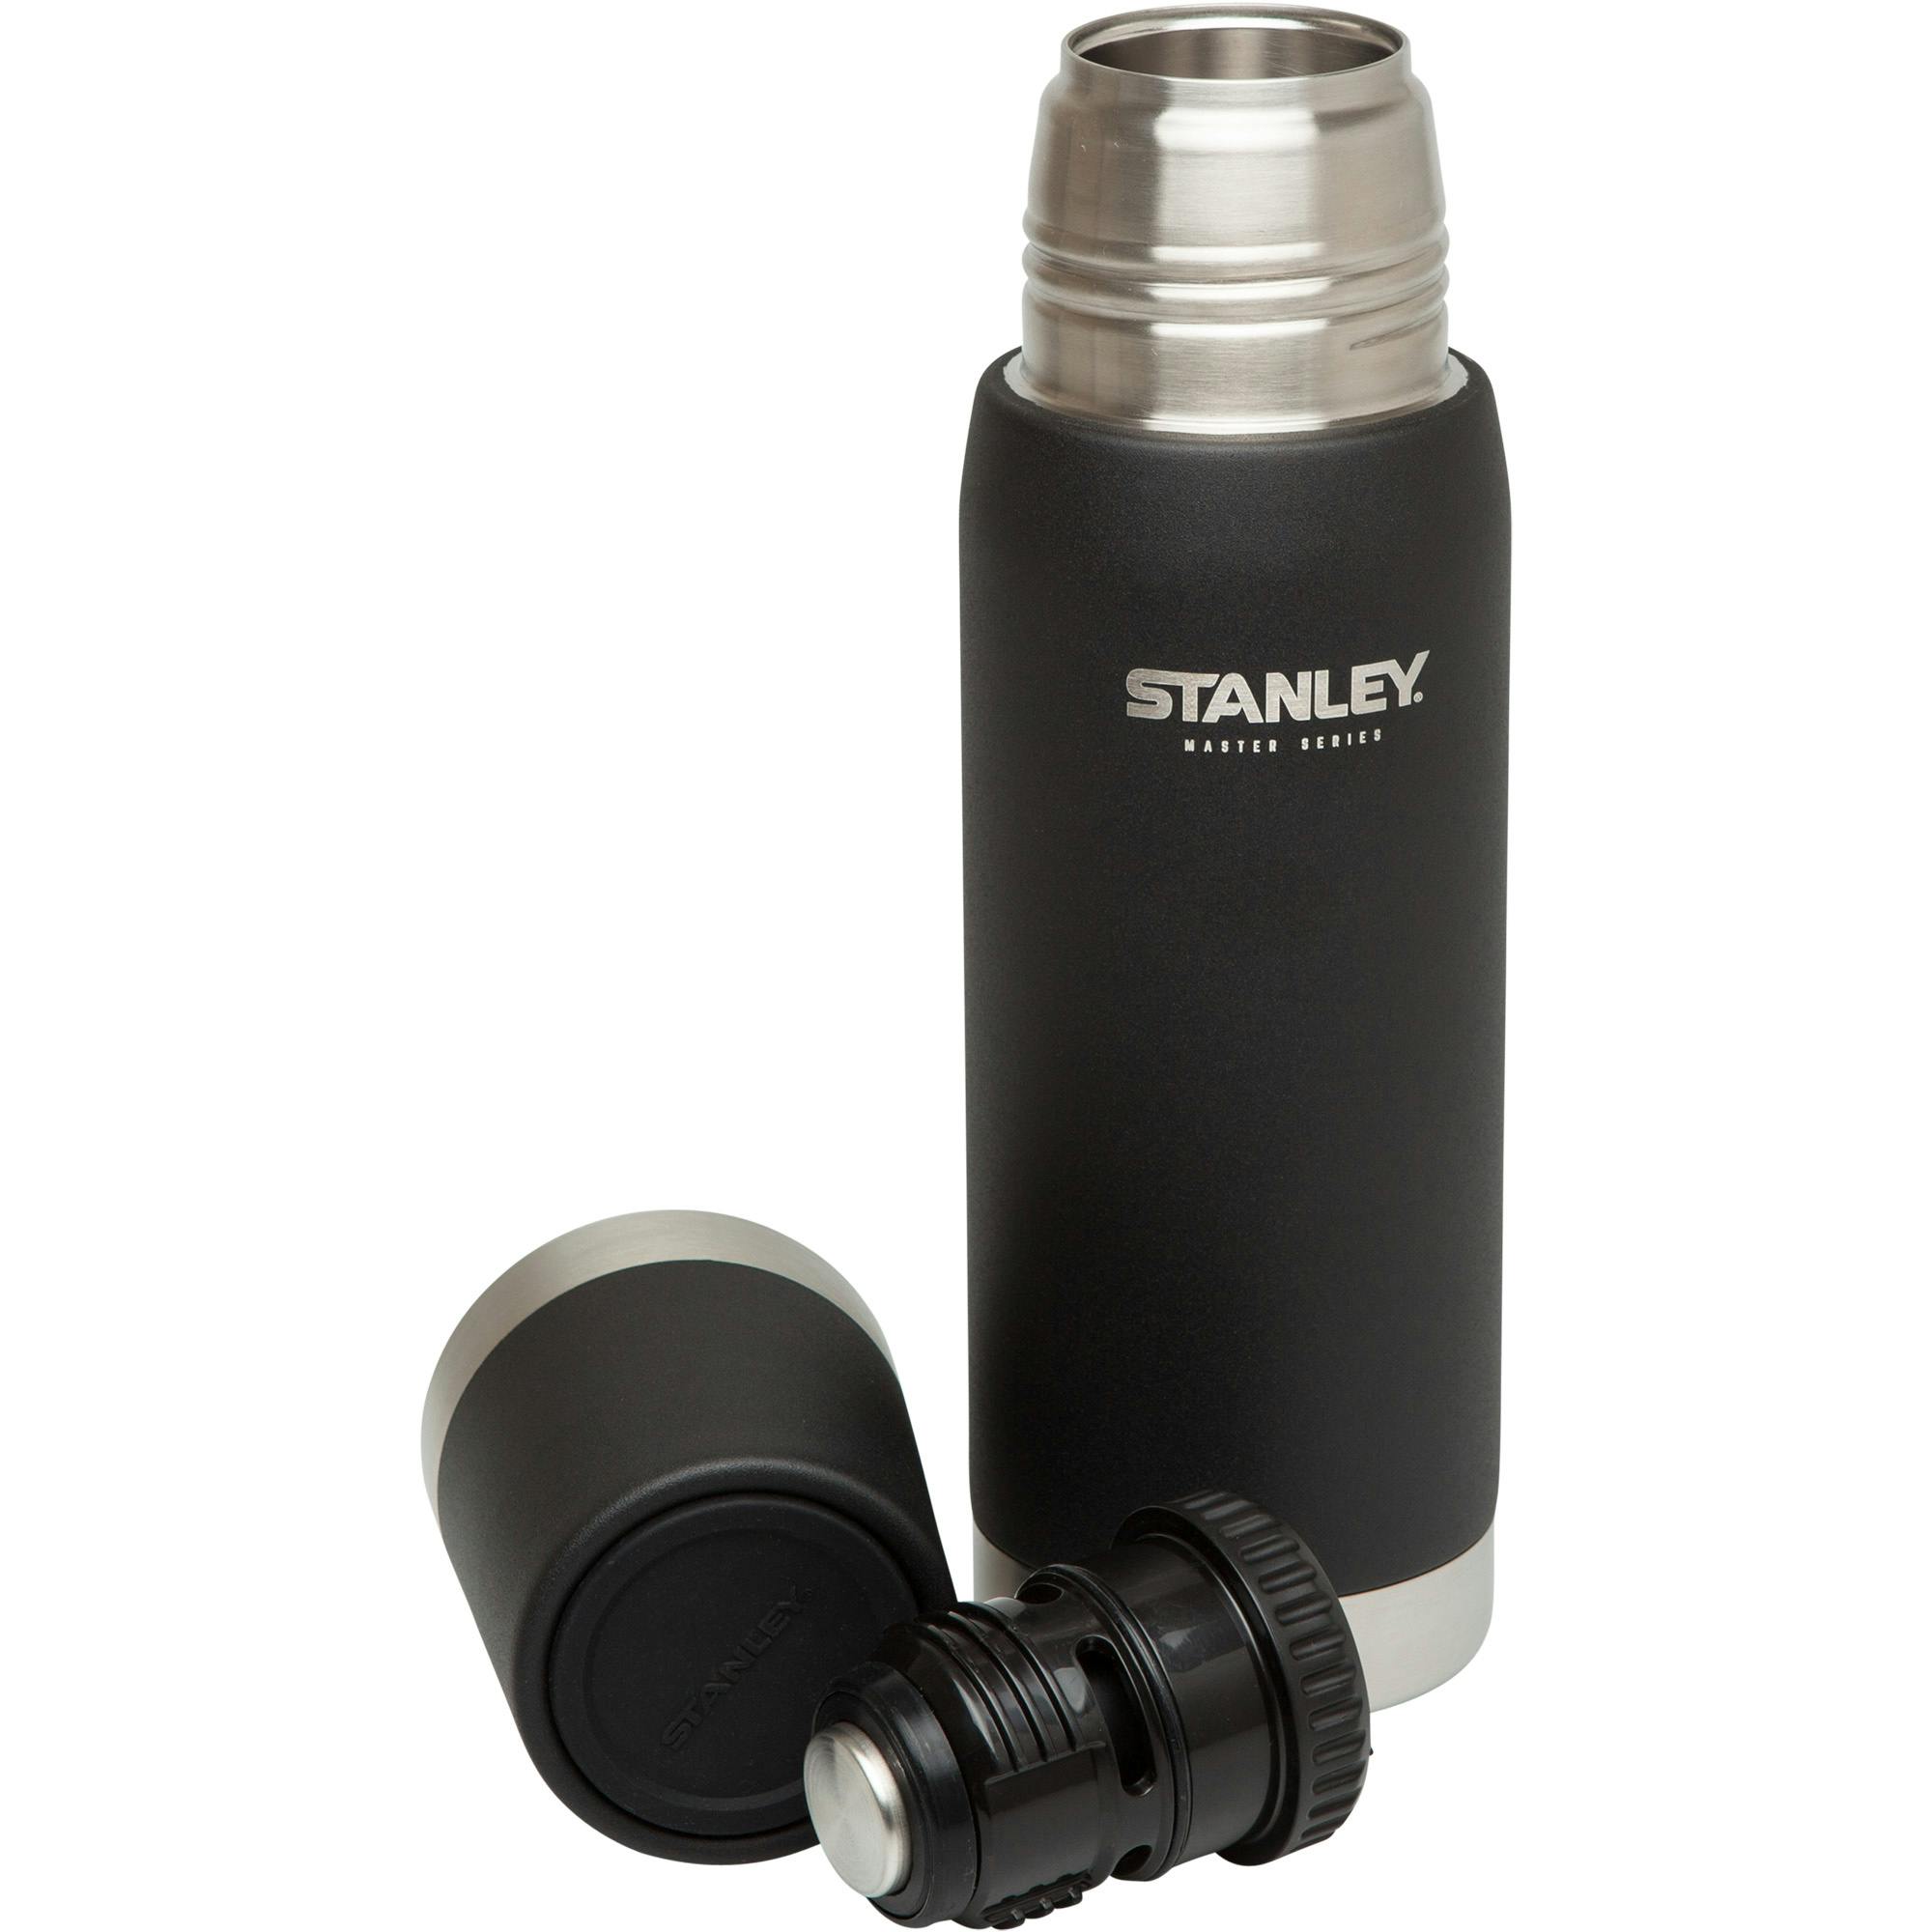 Stanley 25 oz. vacuum bottle